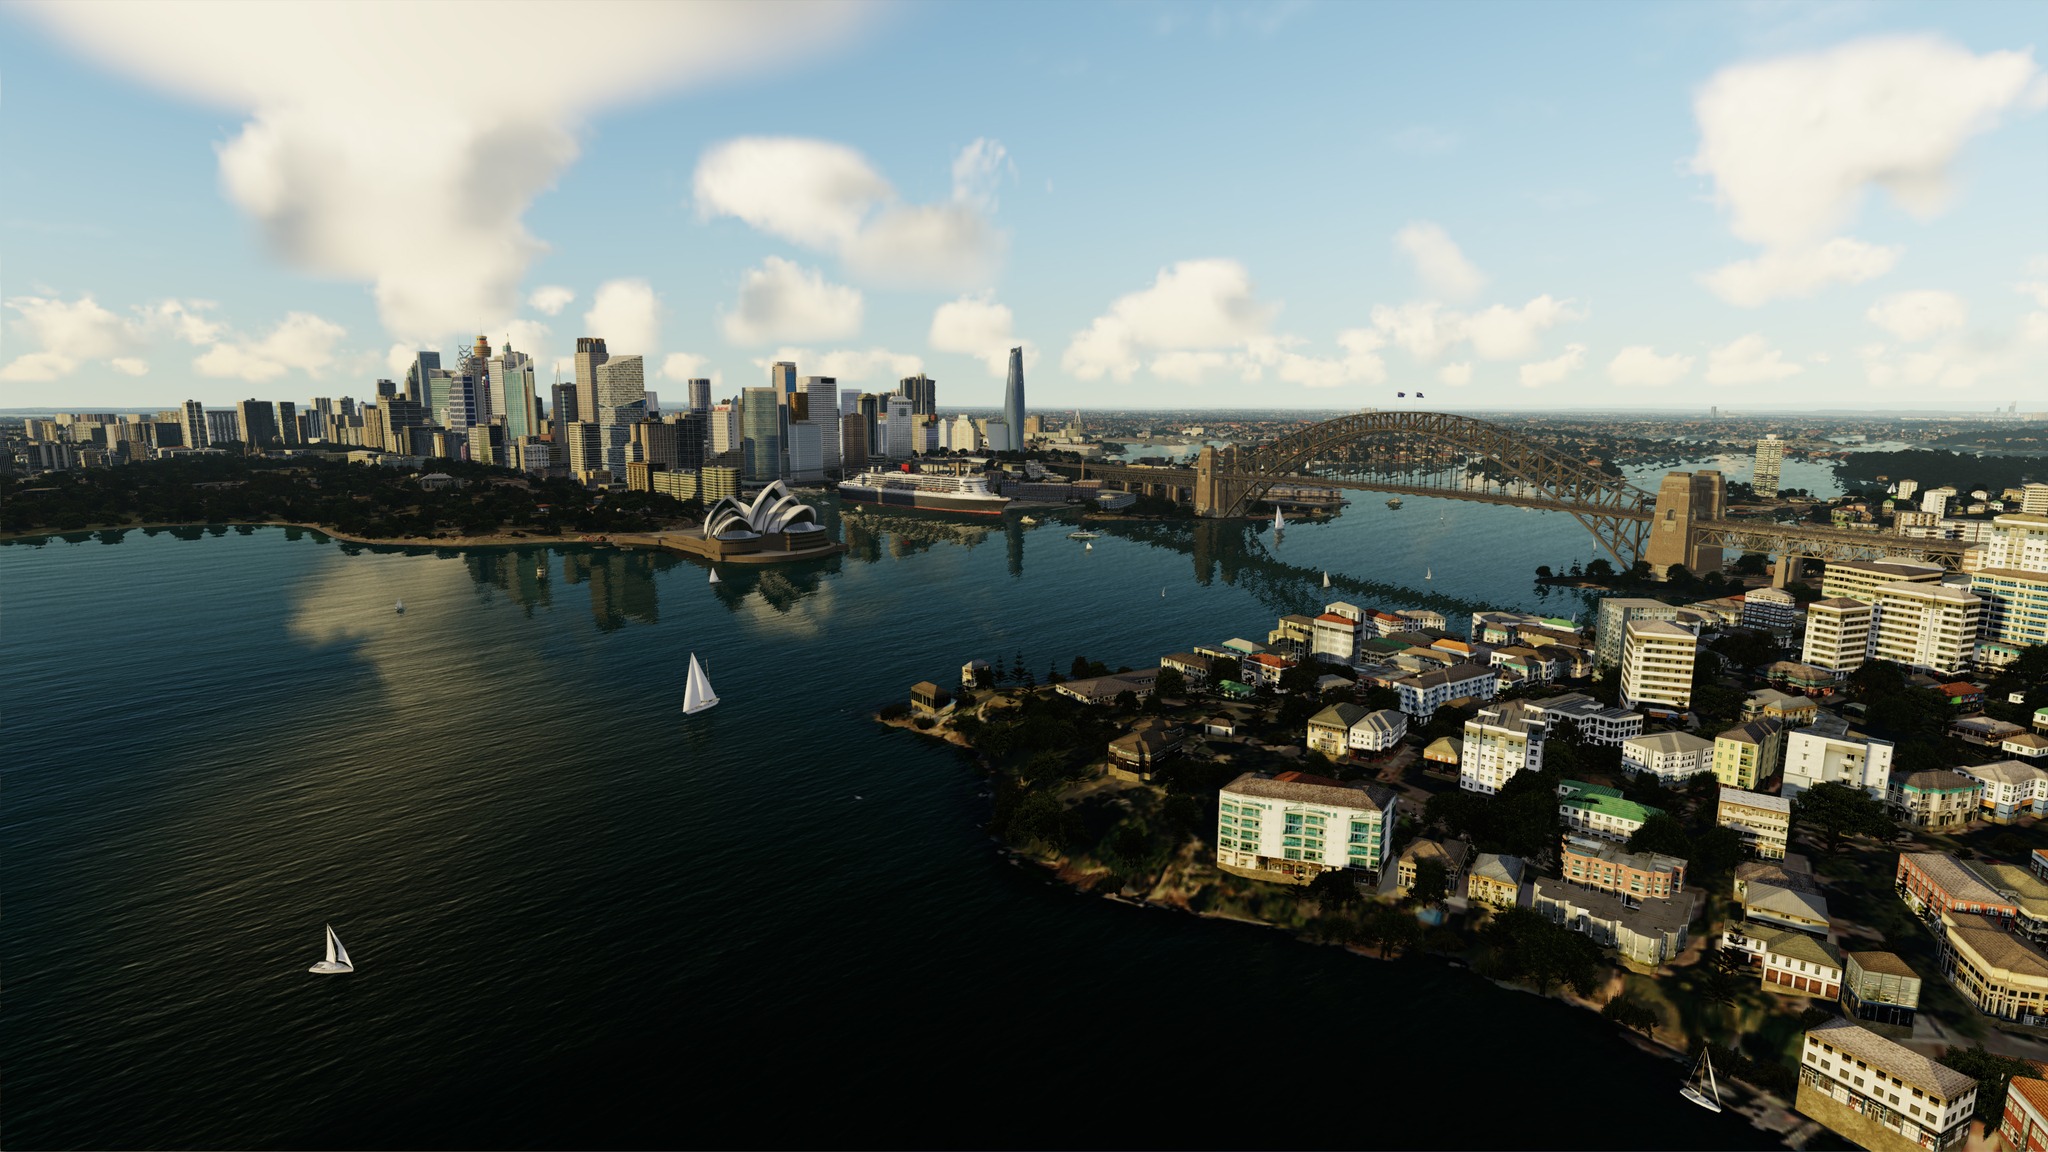 Orbx Releases CityScape Sydney for P3D - Microsoft Flight Simulator, Orbx